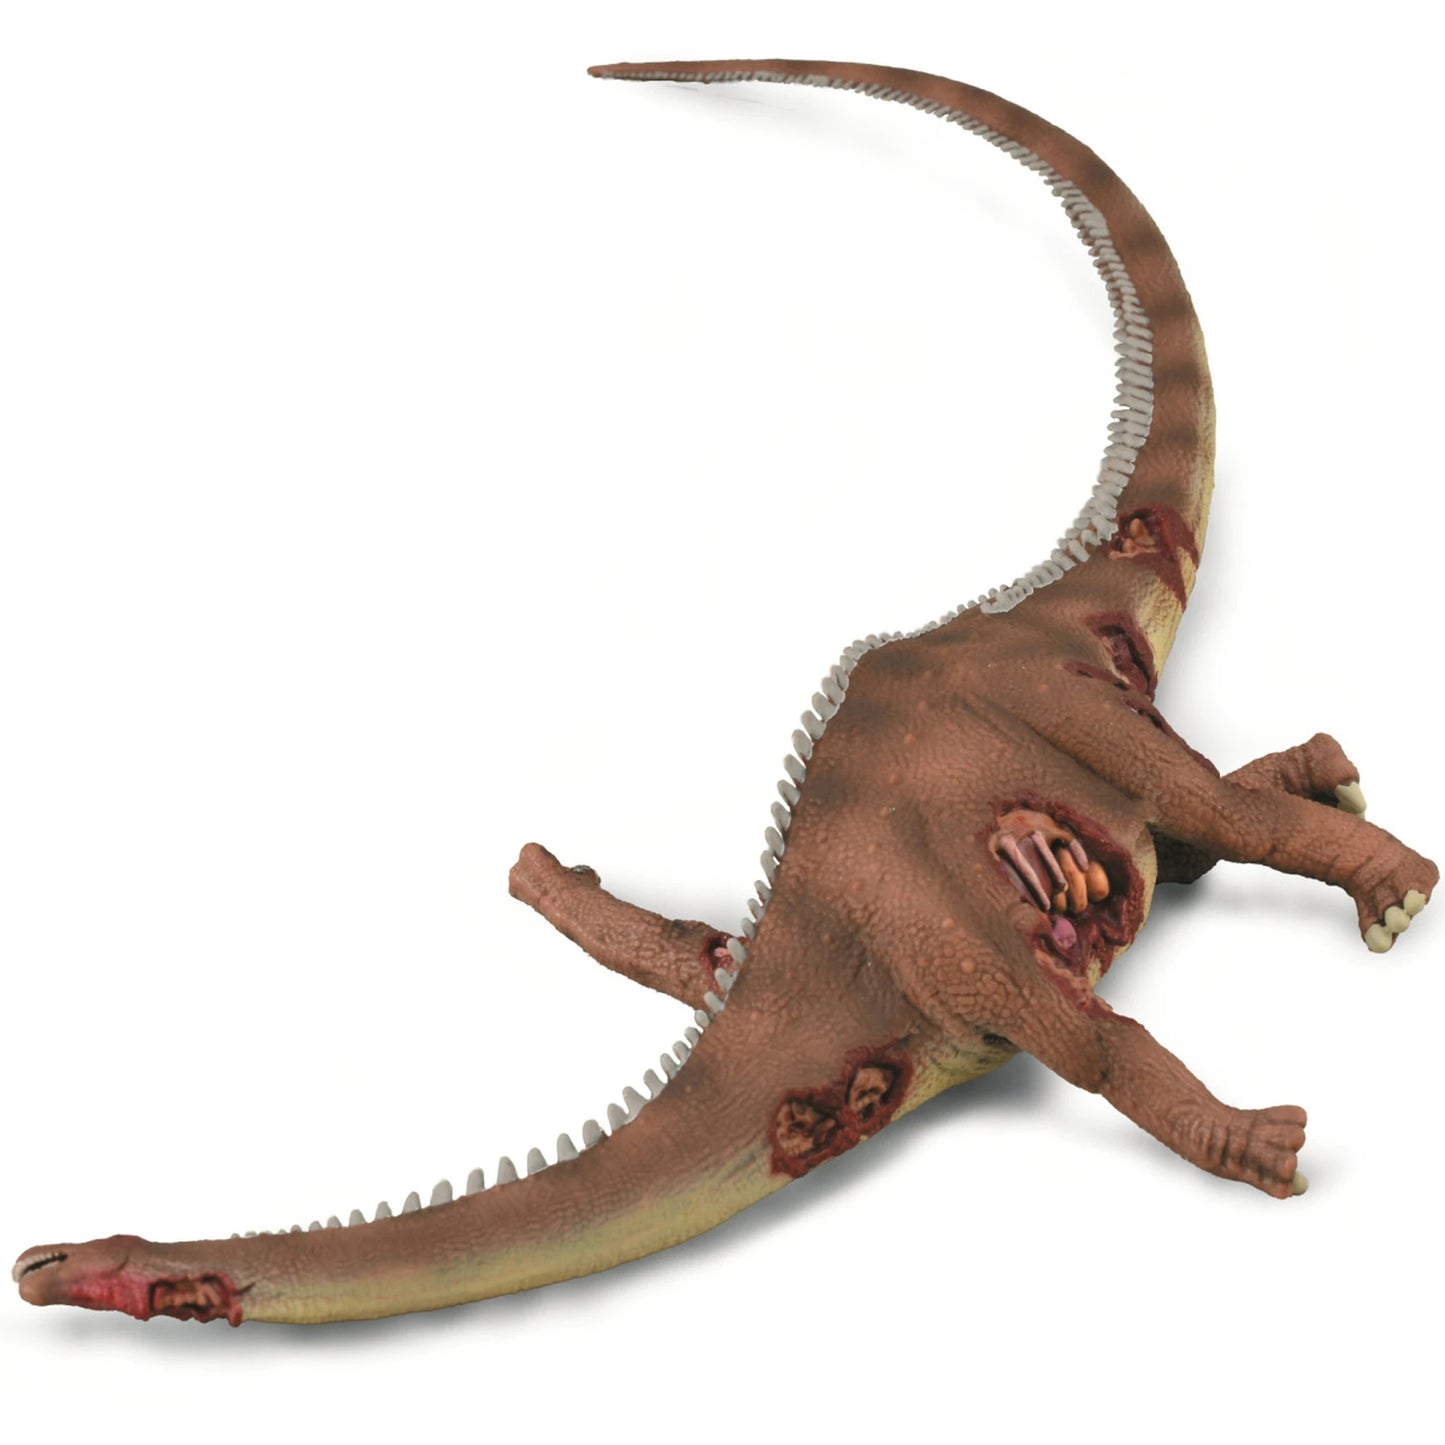 Brontosaurus prey figurine